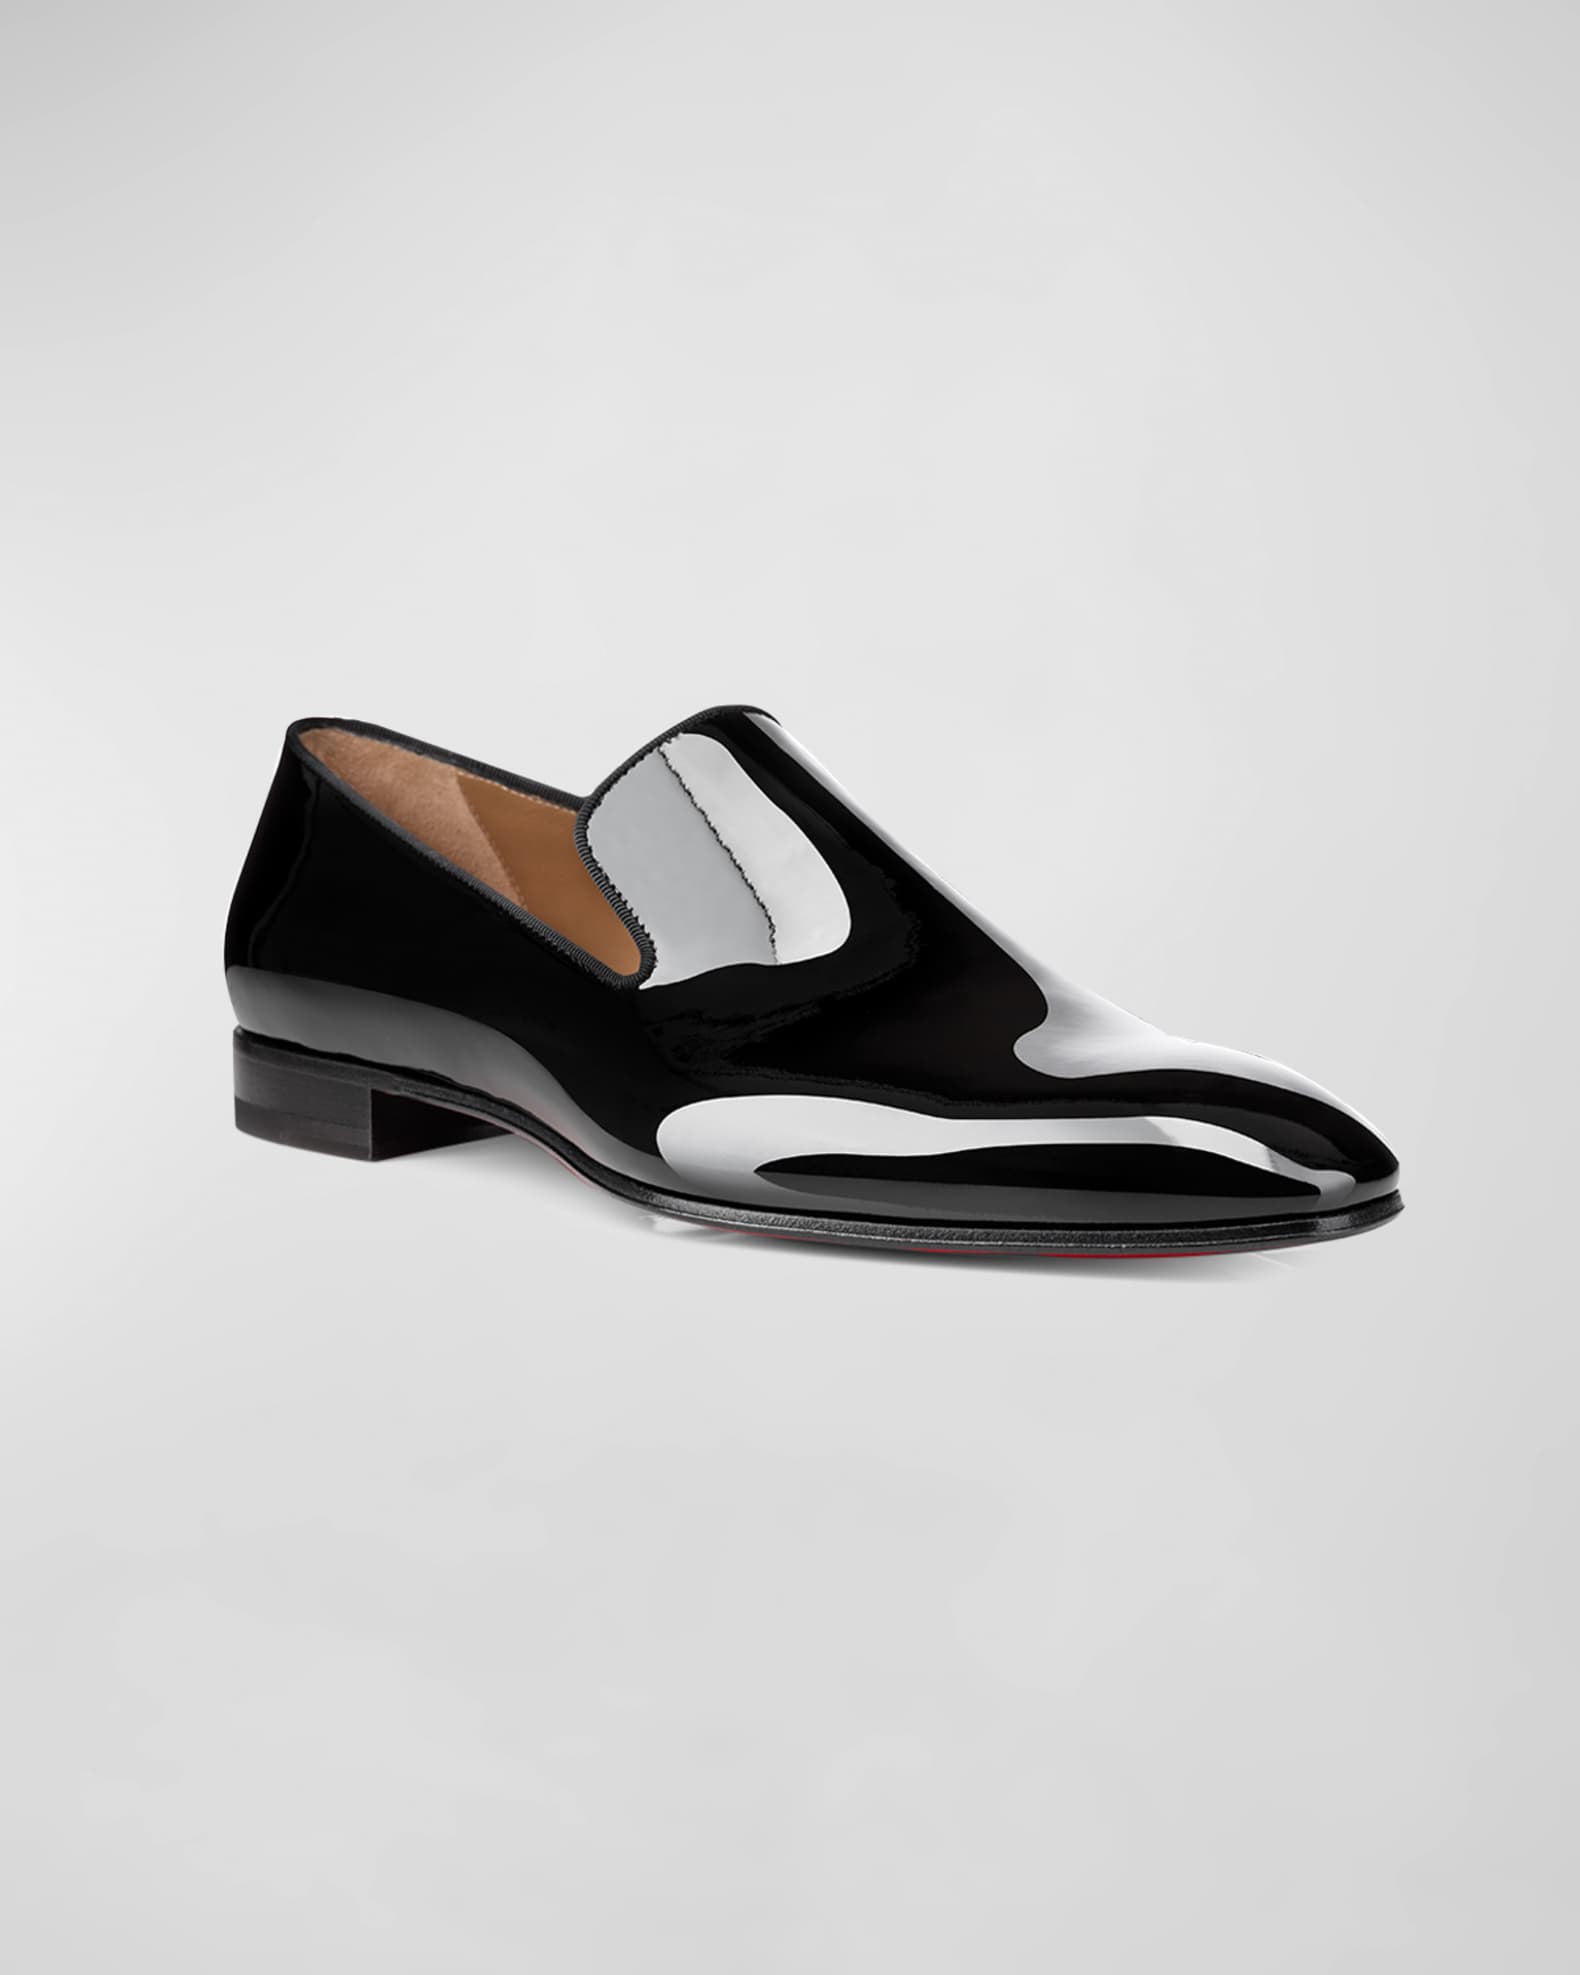 Christian Louboutin Men's Dandelion Patent Leather Loafers | Neiman Marcus